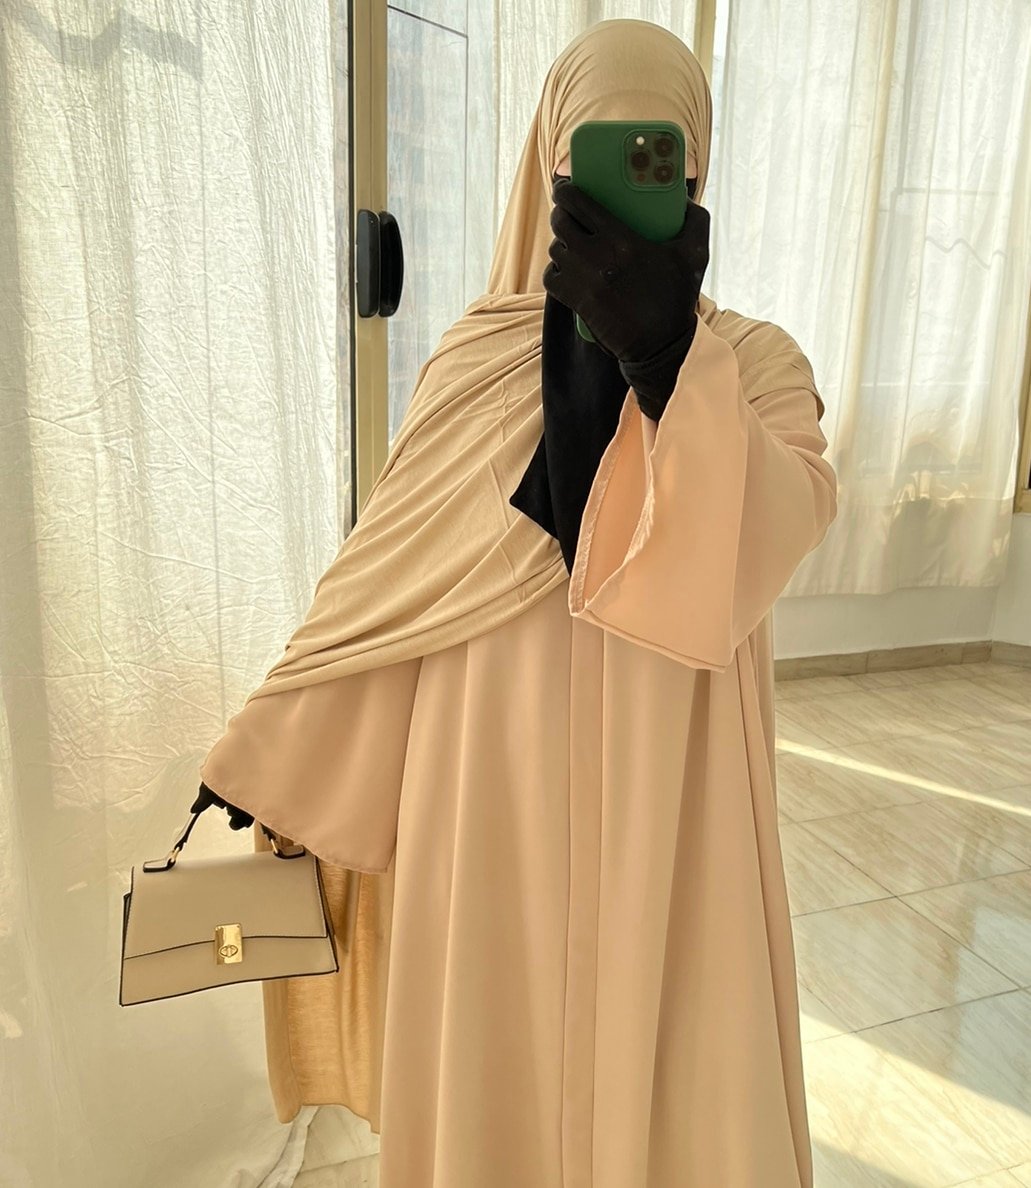 abaya petite taille - 1m60